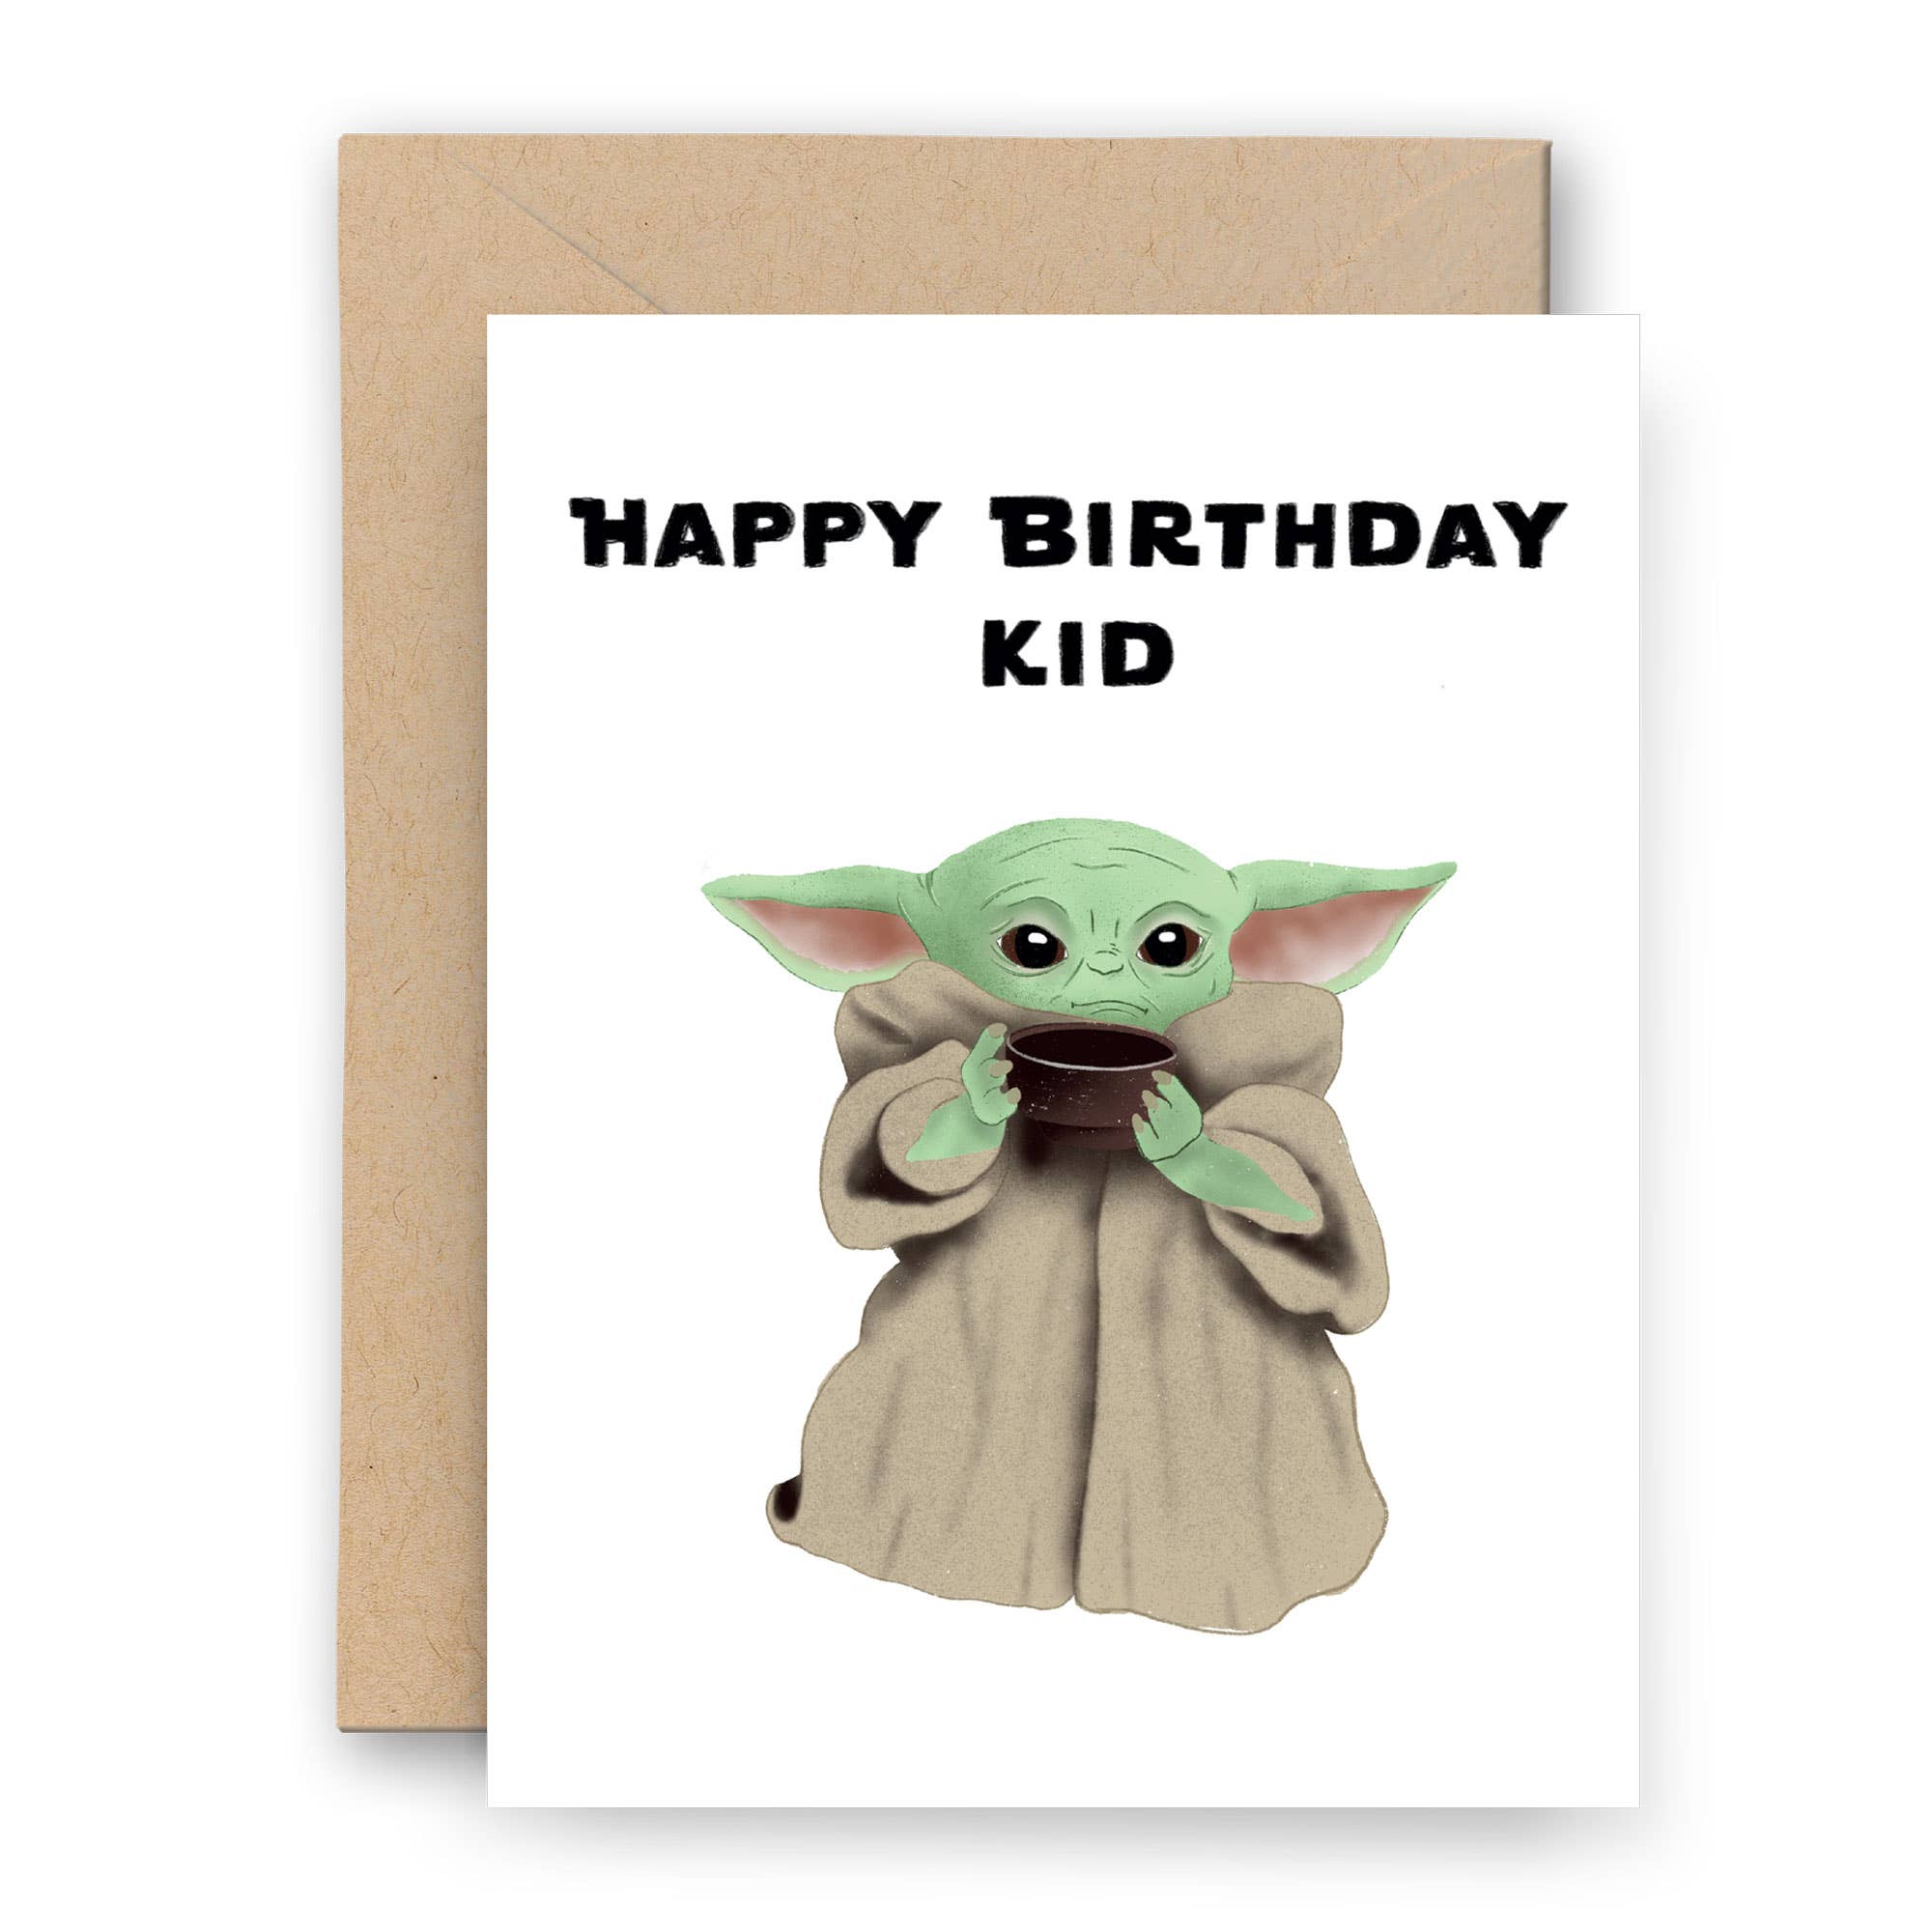 Happy Birthday Kid Card